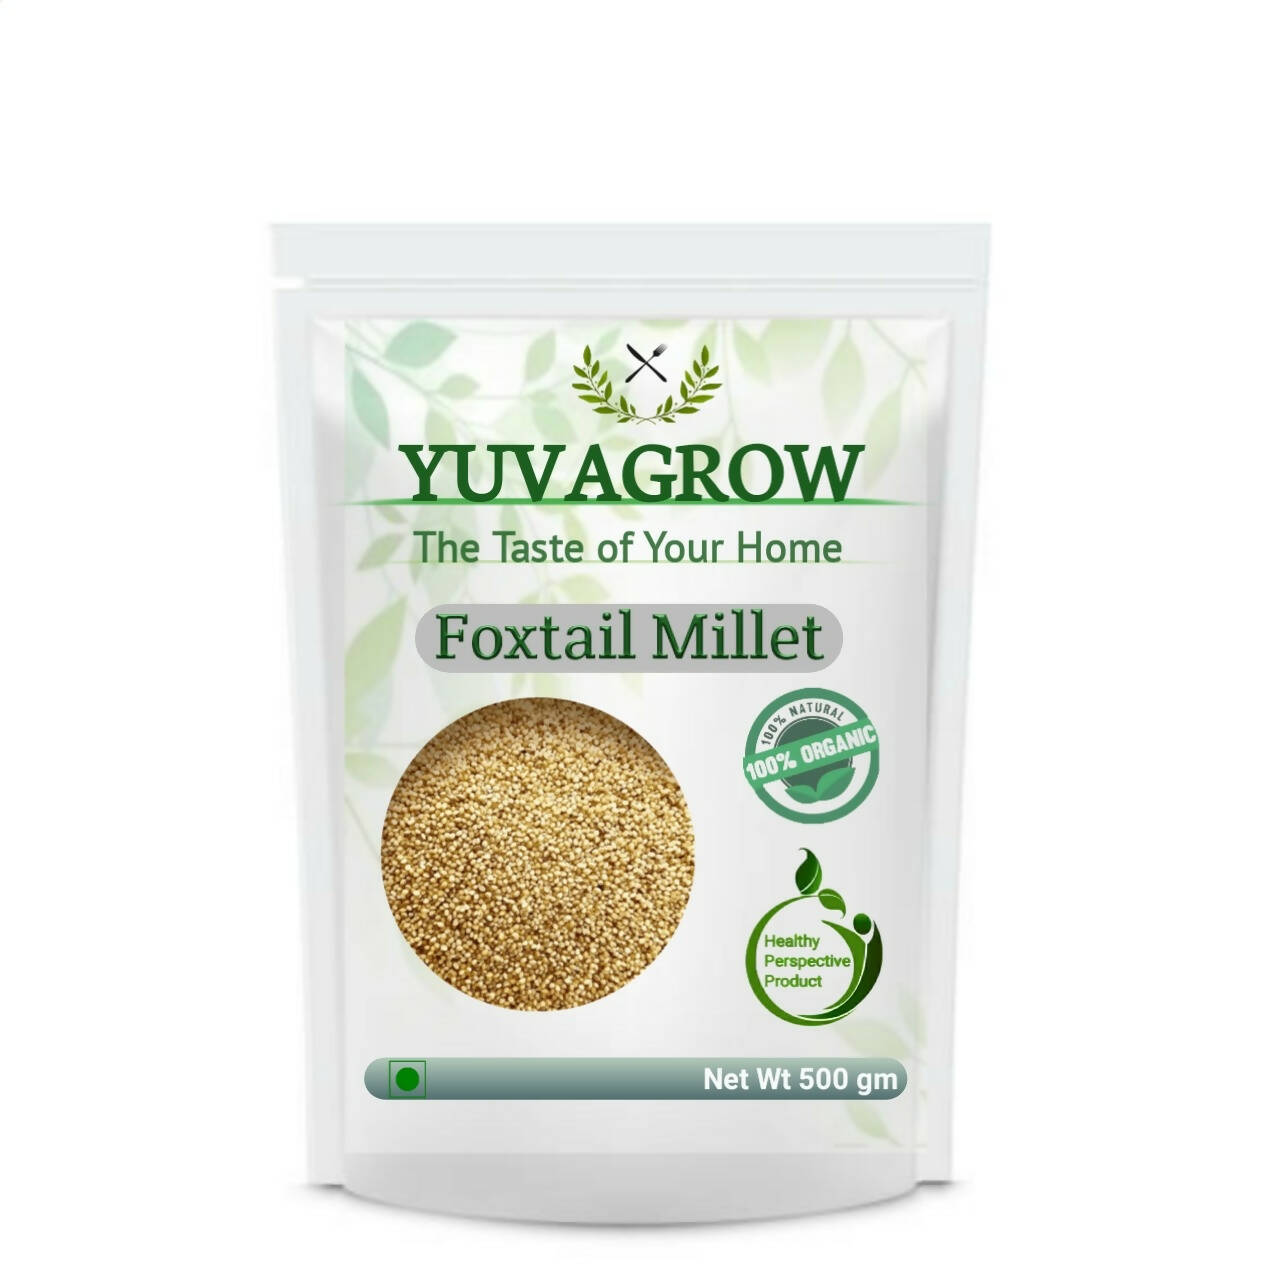 Yuvagrow Foxtail Millet - buy in USA, Australia, Canada